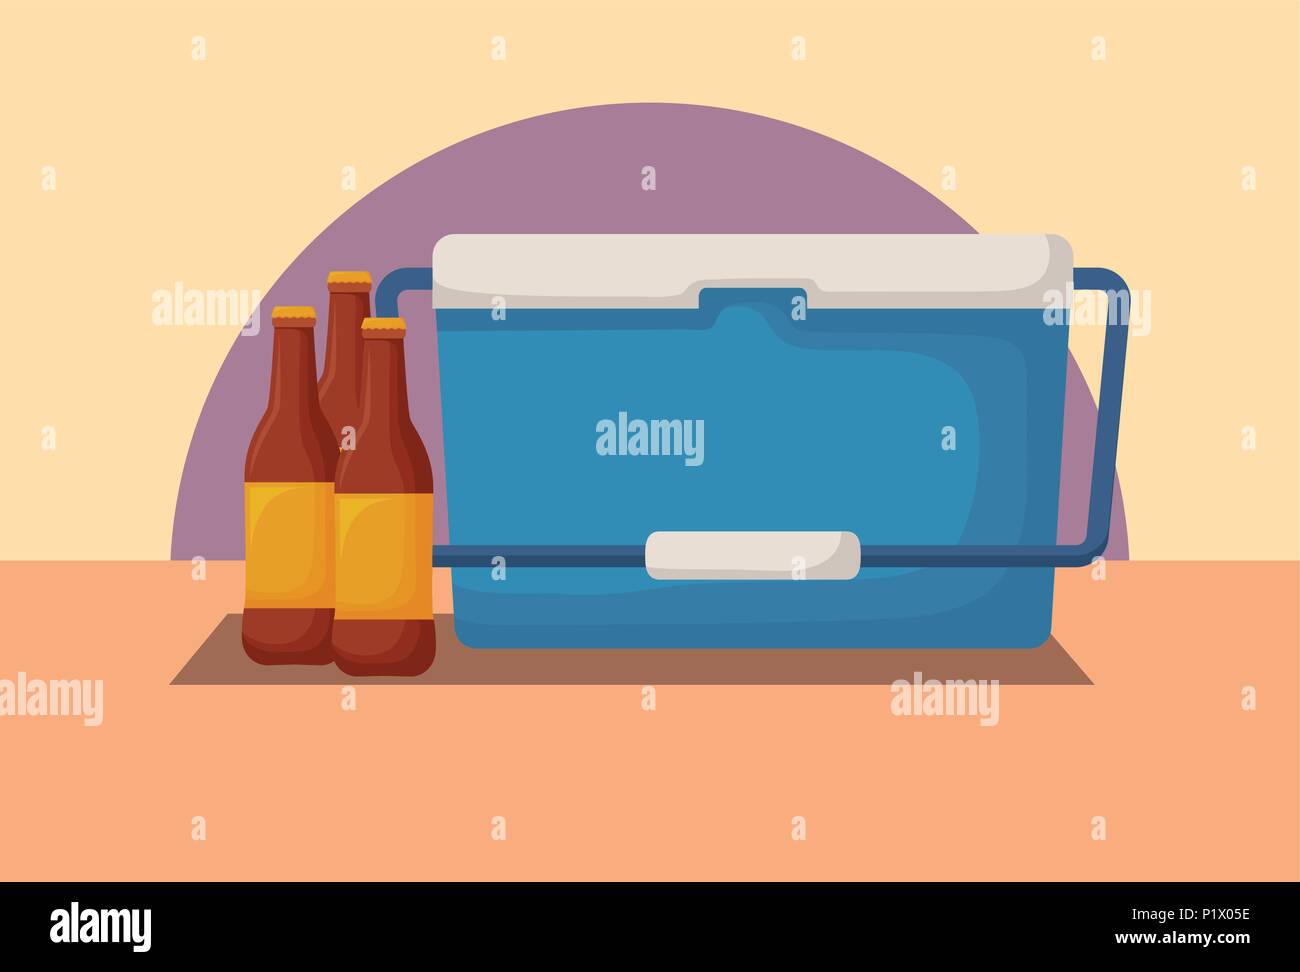 picnic cooler and beer bottles over background, colorful design. vector illustration Stock Vector